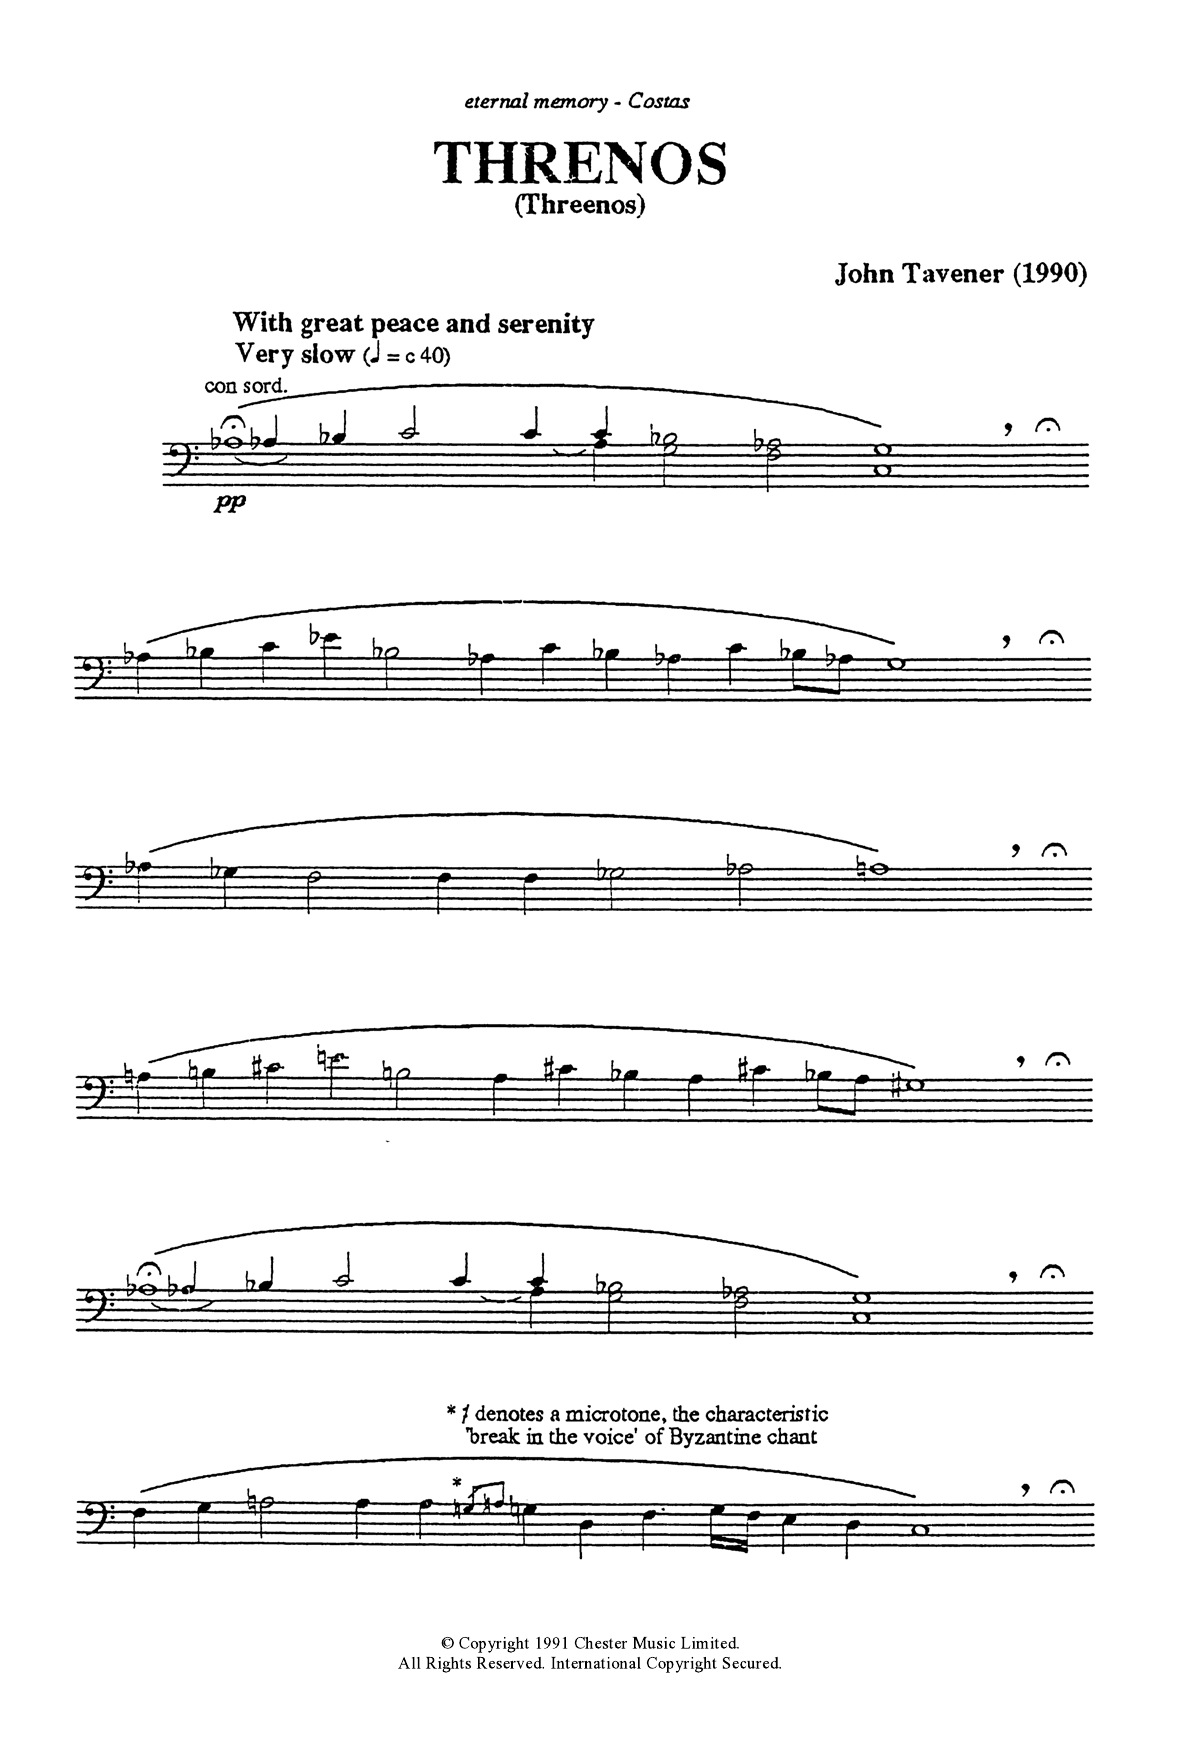 John Tavener Thrinos Sheet Music Notes & Chords for Cello - Download or Print PDF